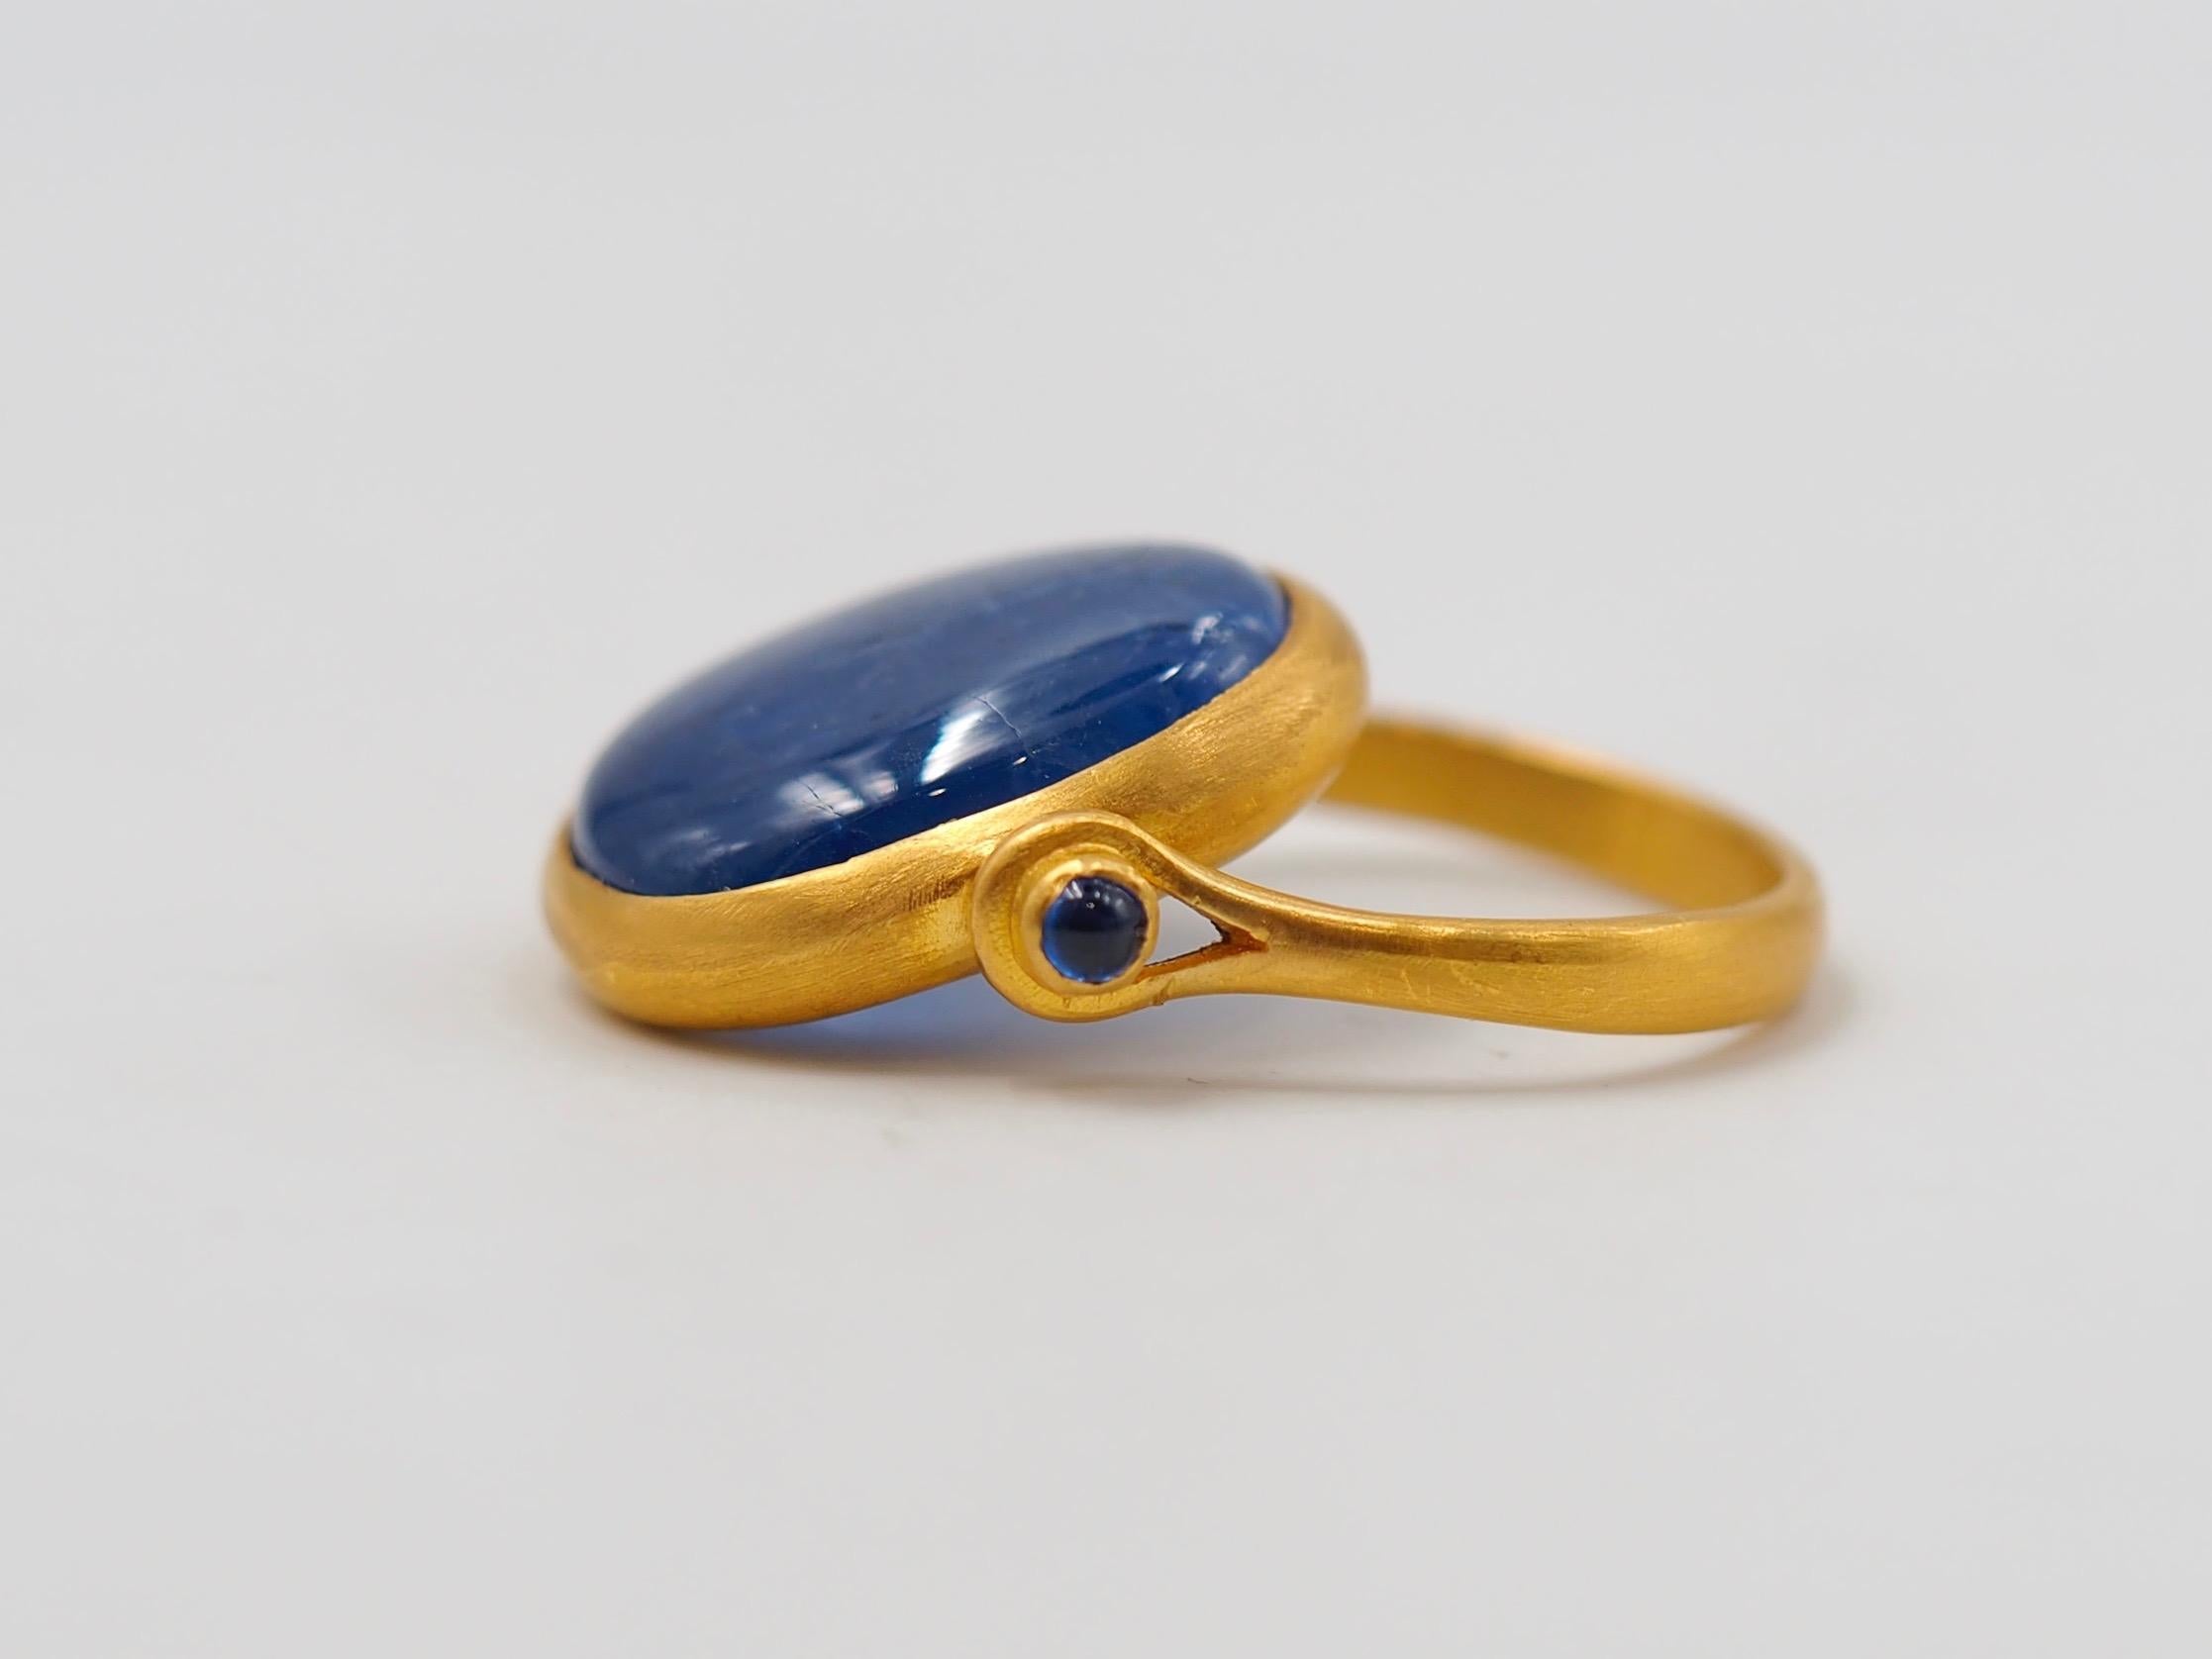 Classical Roman Scrives 15.43 Carat Natural Blue Sapphire Cabochon 22 Karat Gold Turning Ring